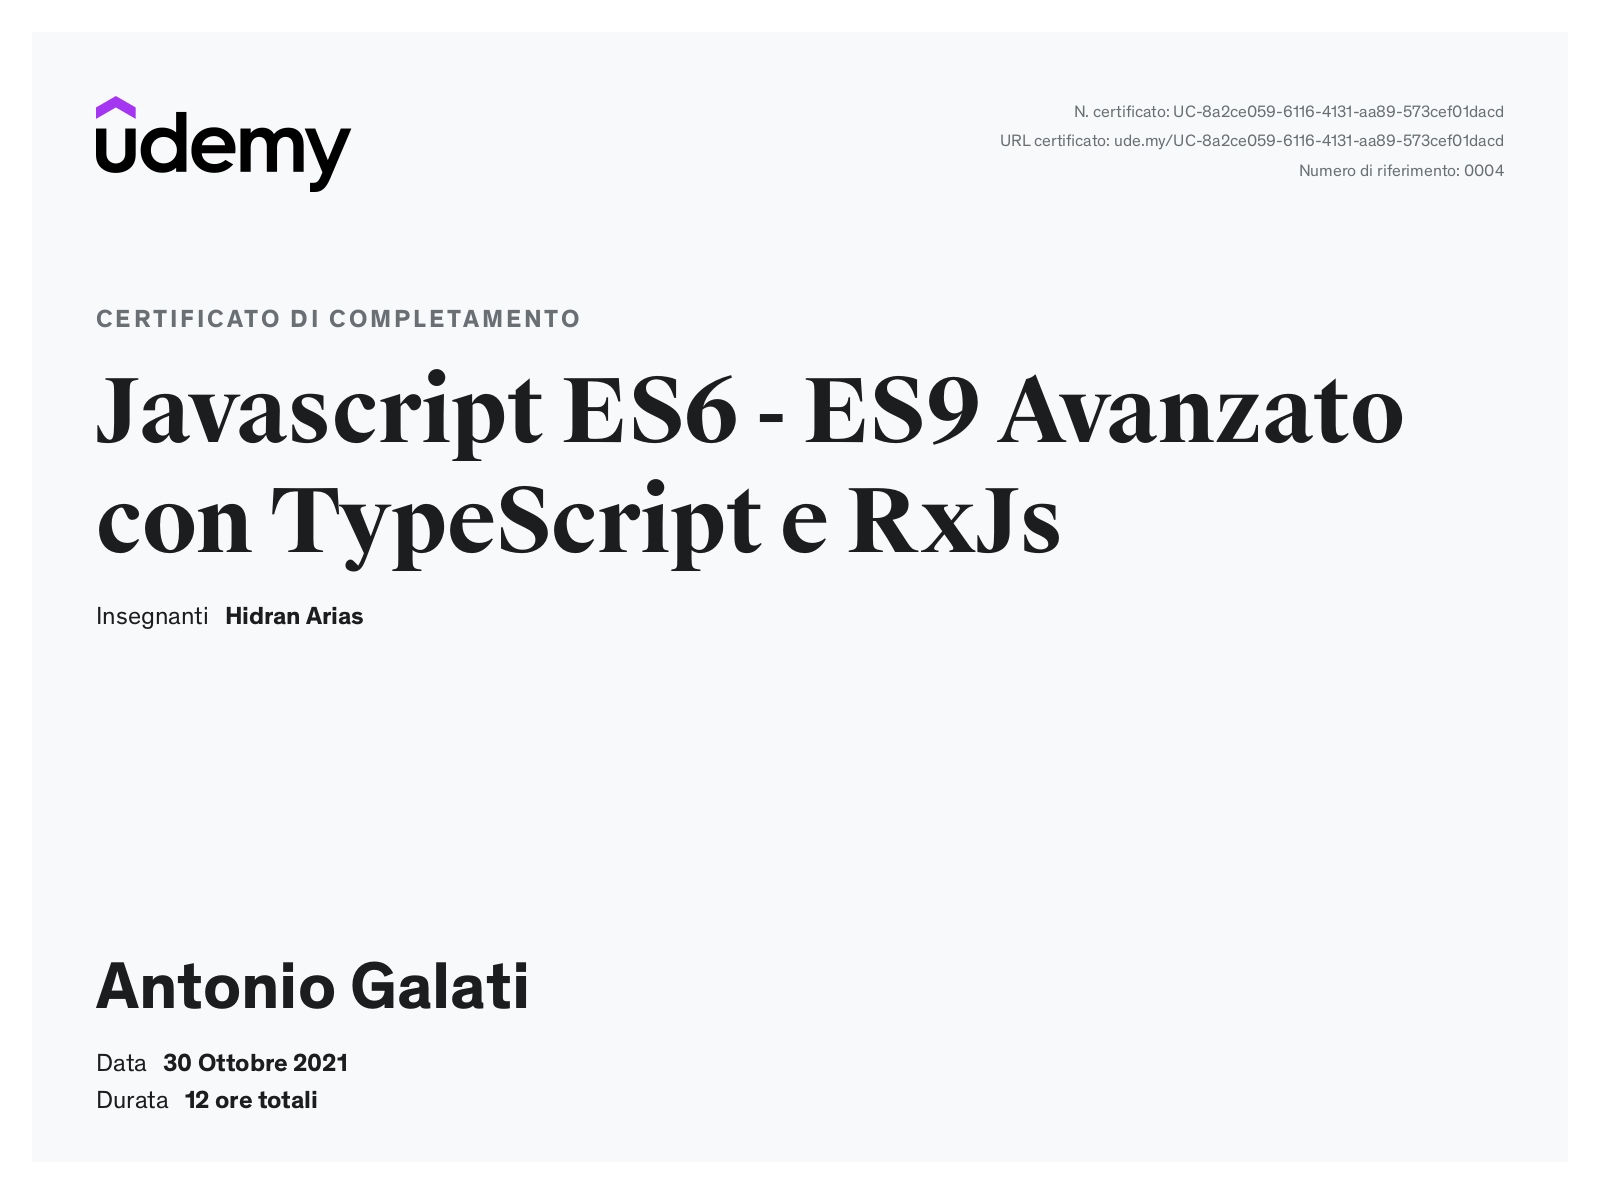 Completamento corso Javascript ES6-ES9 avanzato con TypeScript e RxJS